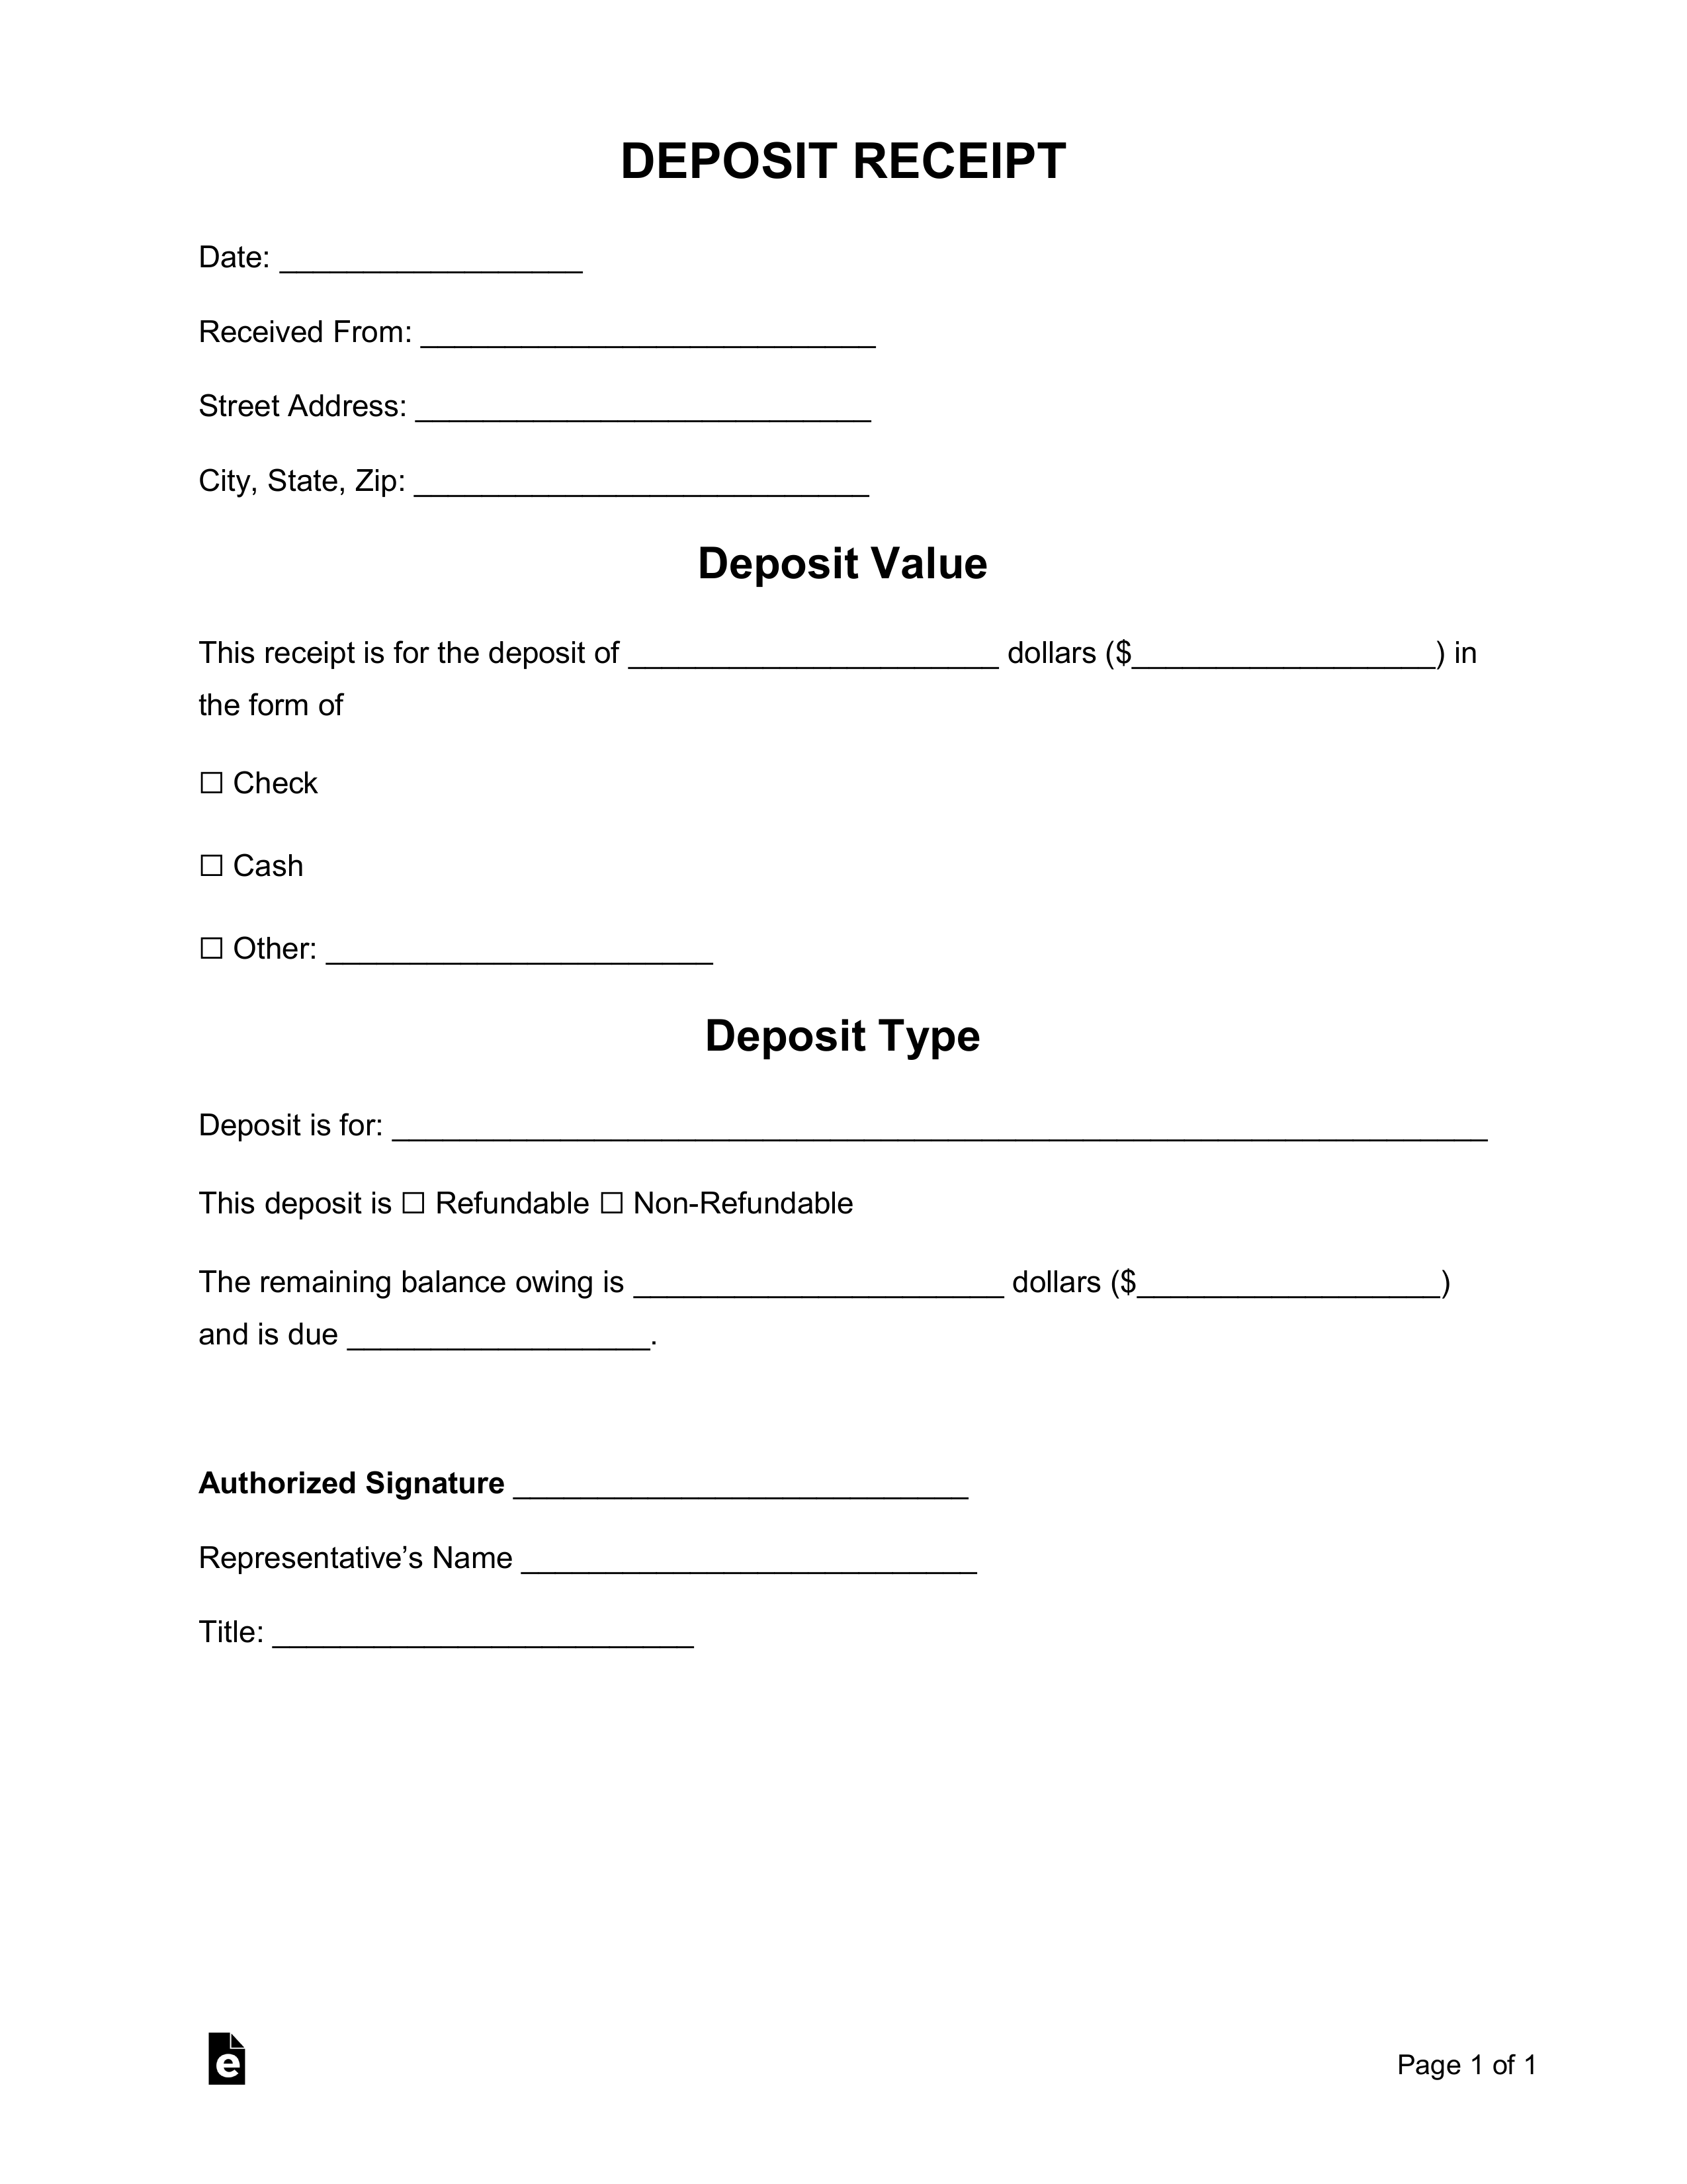 Free Deposit Receipt Templates - Word  PDF – eForms Regarding Refundable Deposit Agreement Template Regarding Refundable Deposit Agreement Template